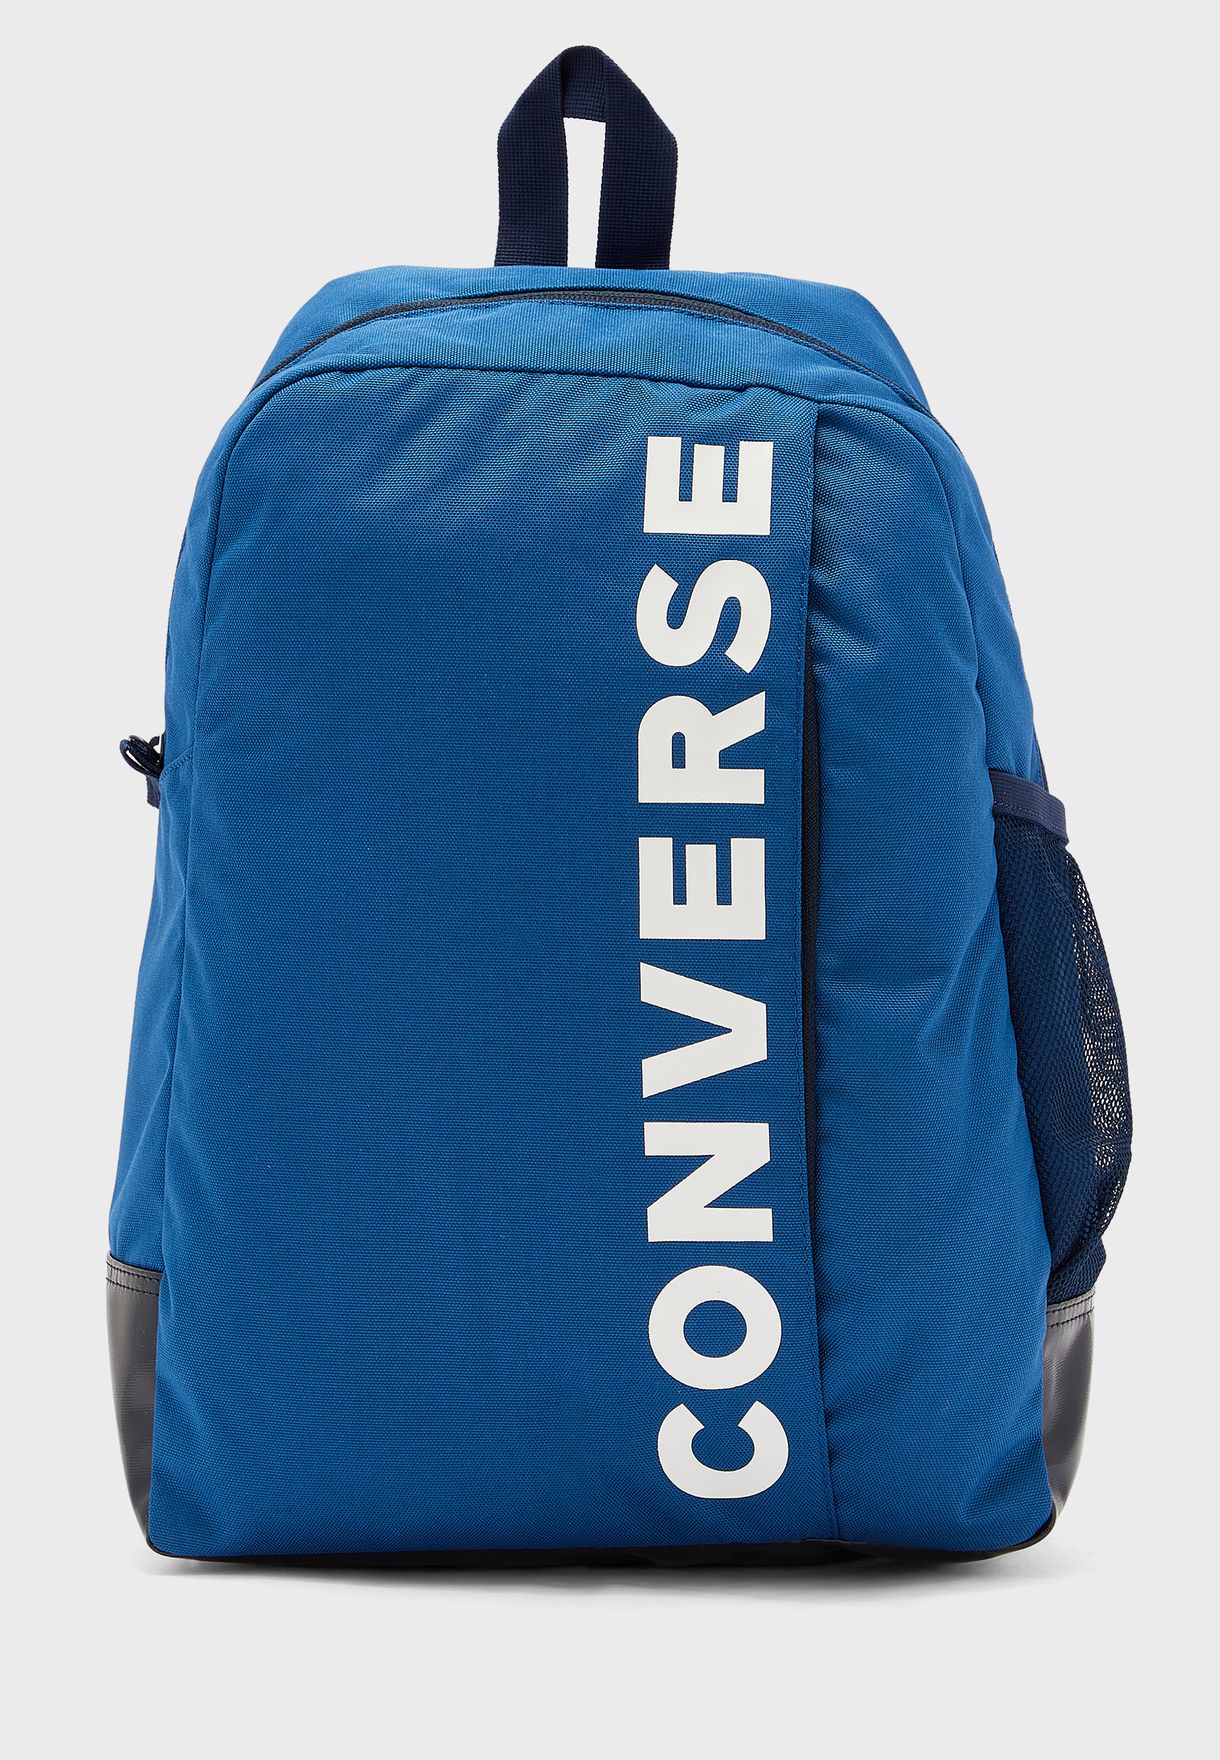 converse 2 blue